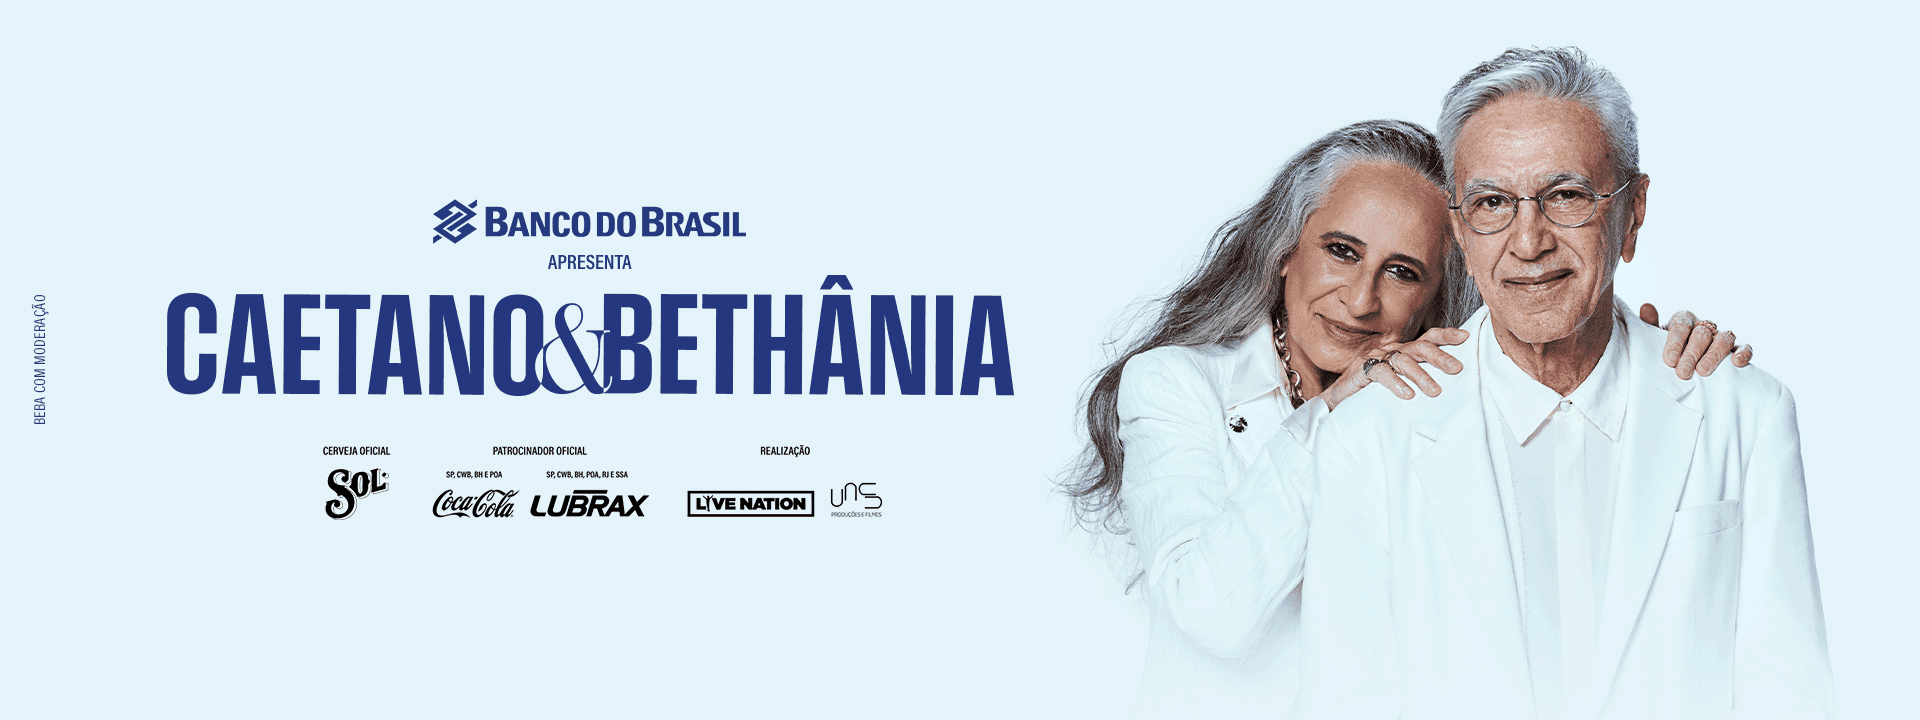 Caetano & Bethânia - Brasília